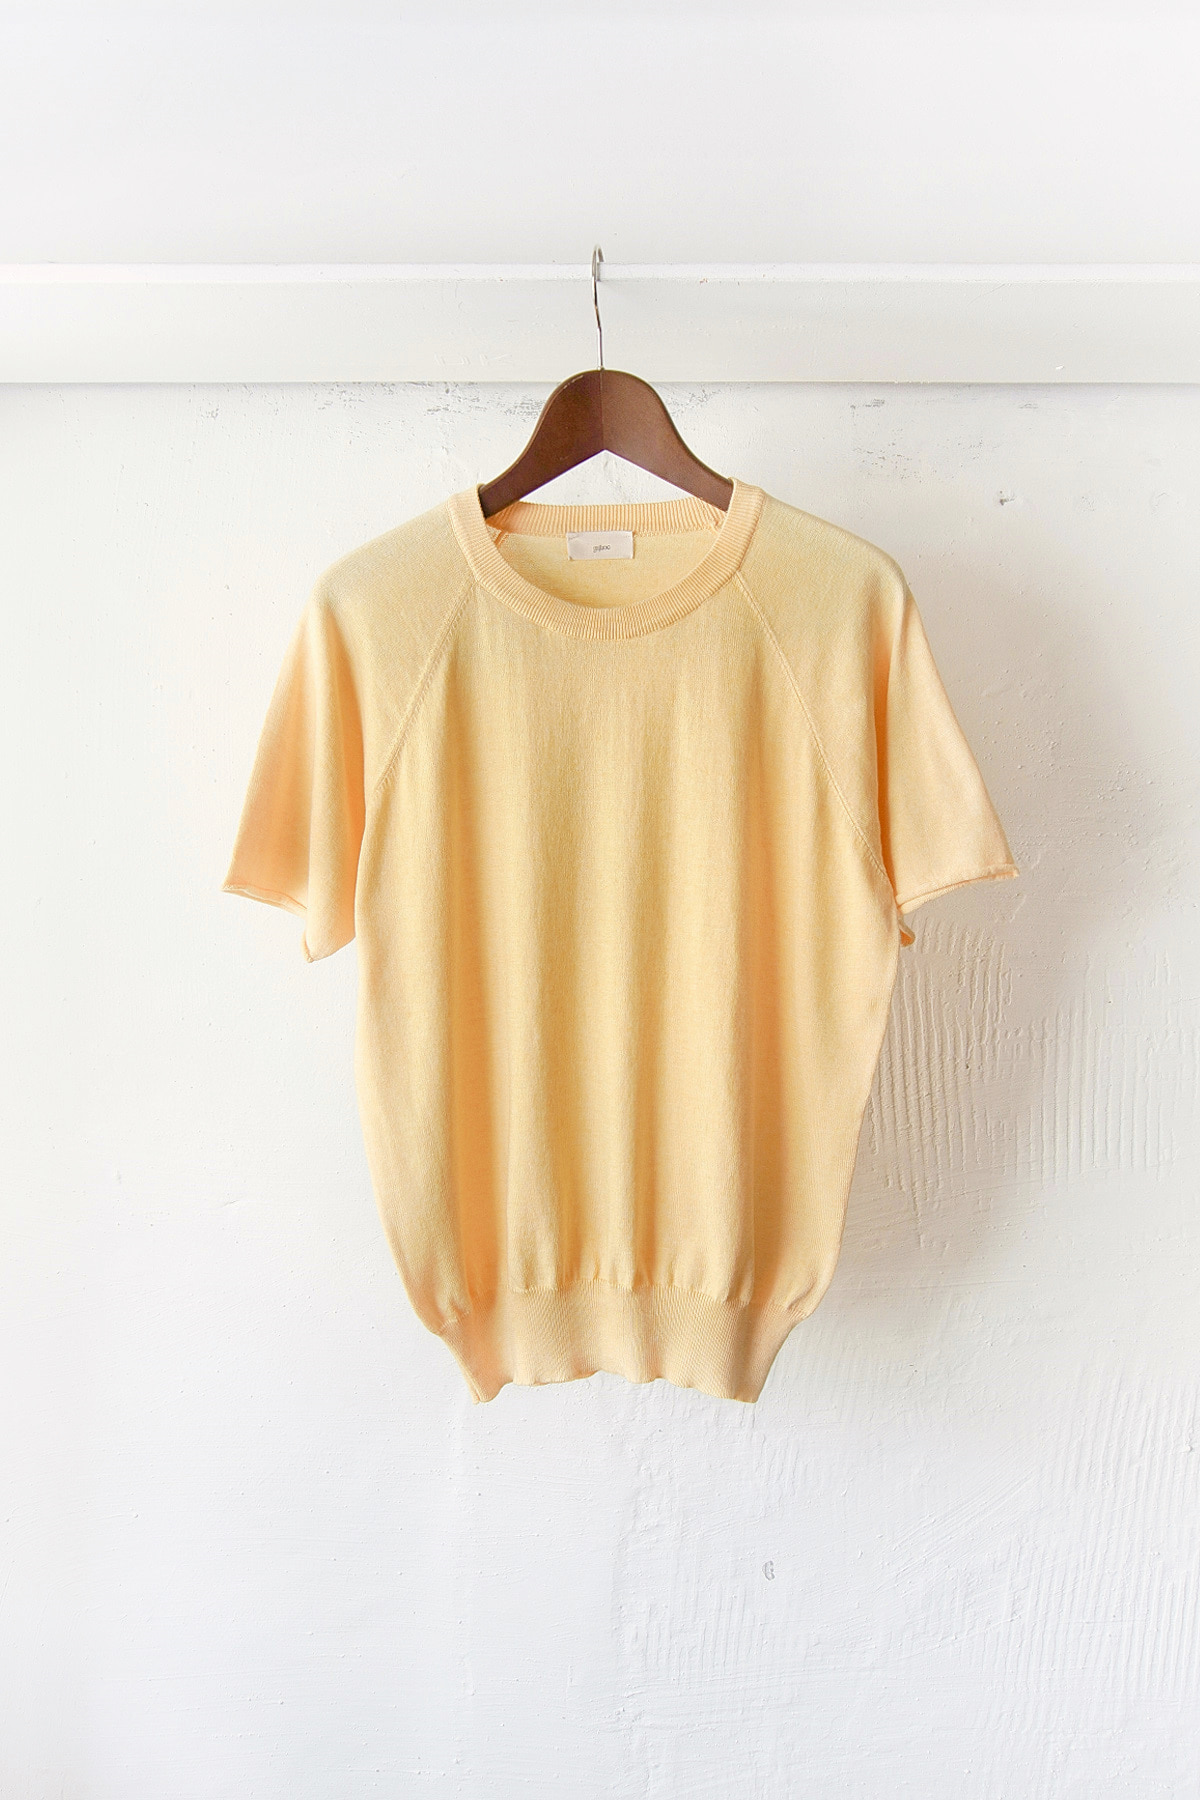 [GAJIROC] Cut-Off Sweater - Yellow